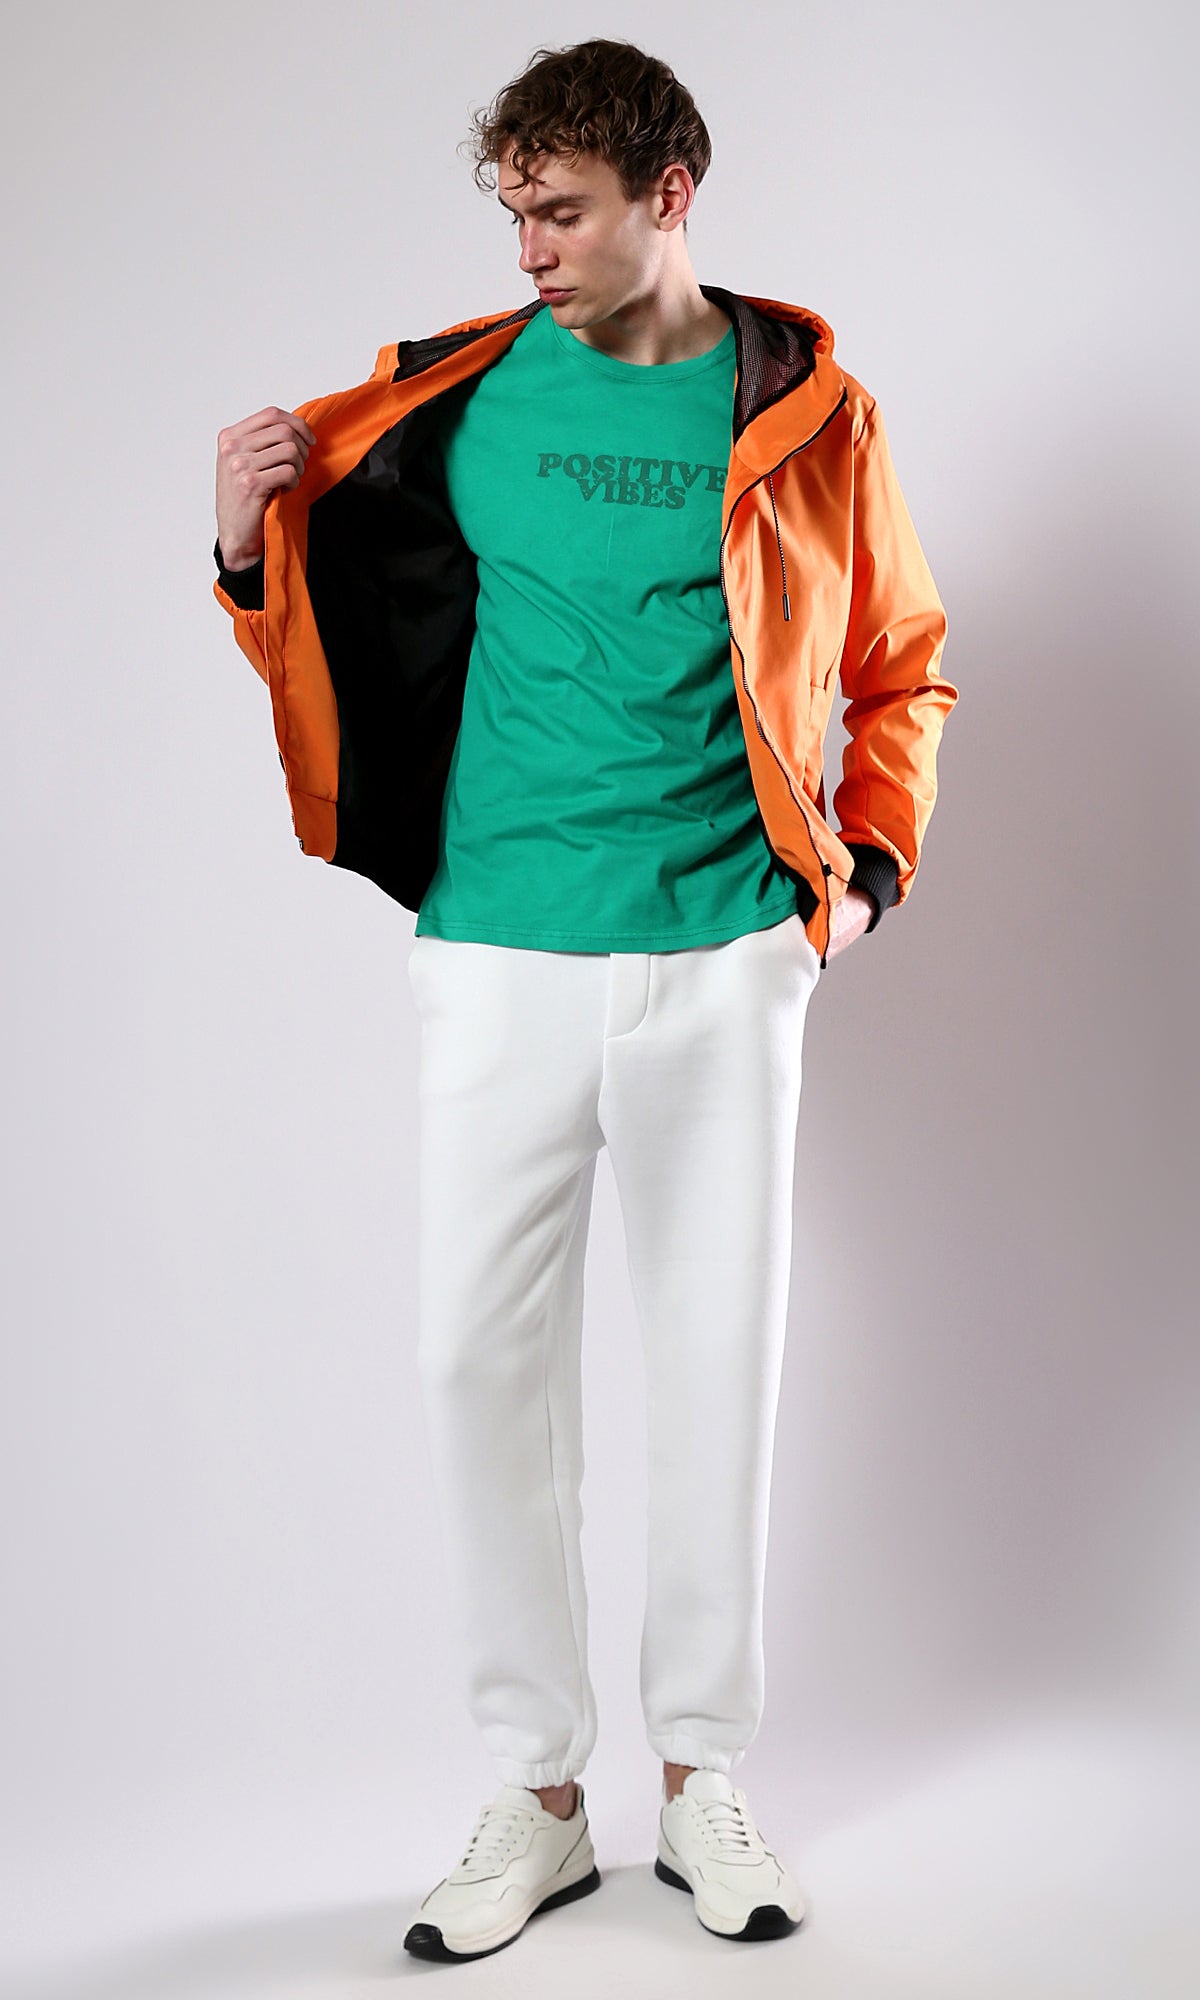 O176268 Solid Orange Jacket With Mesh Hooded Neck